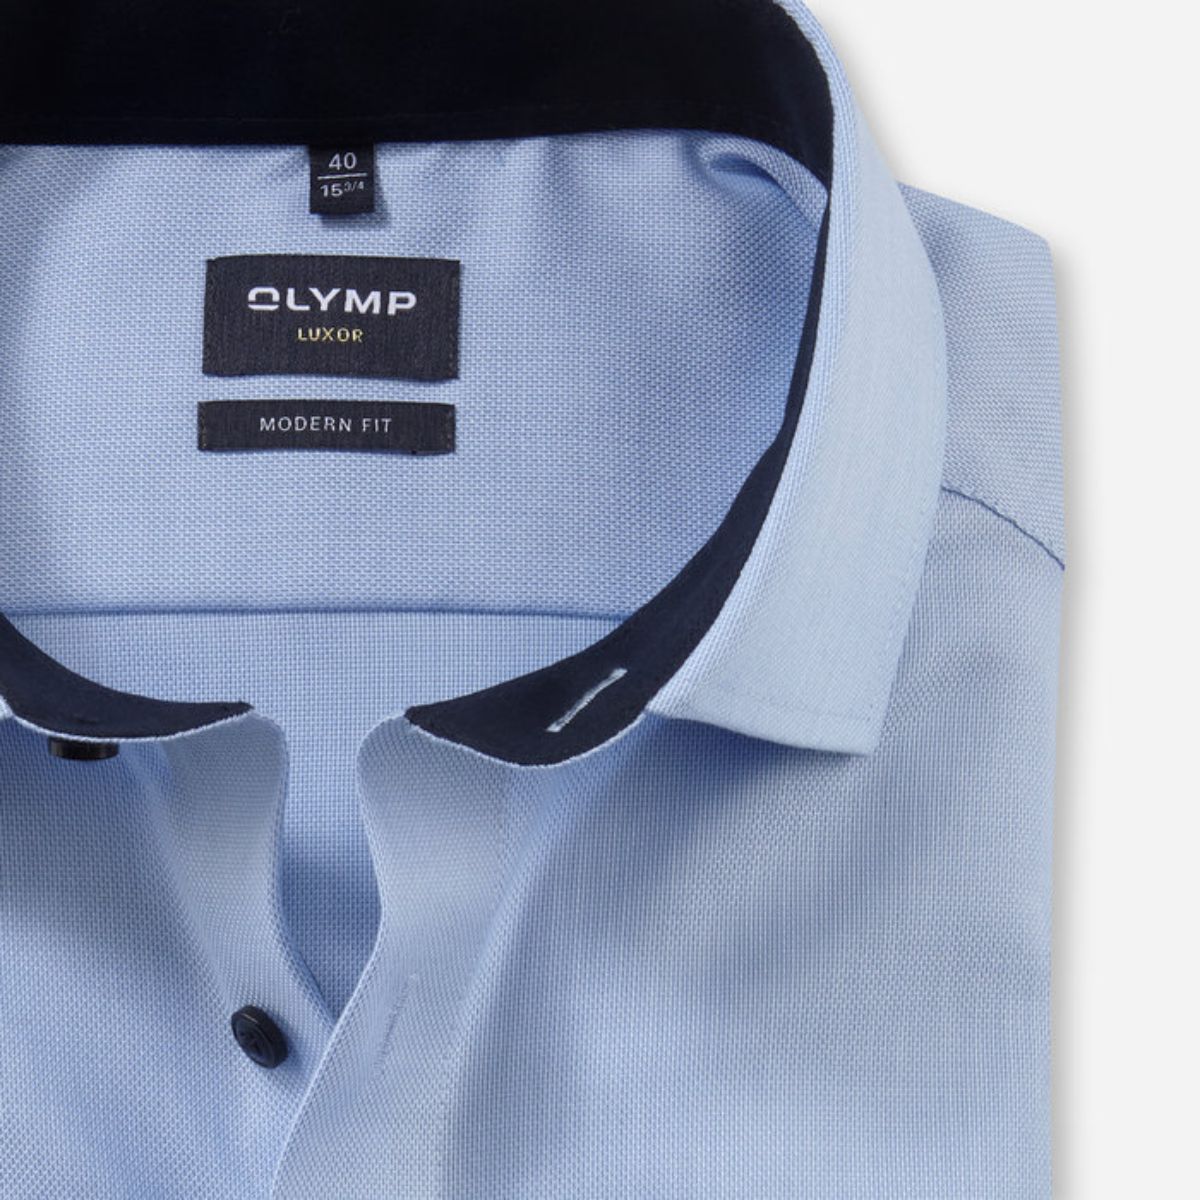 Olymp Modern Fit Shirt - Light Blue/Navy Trim